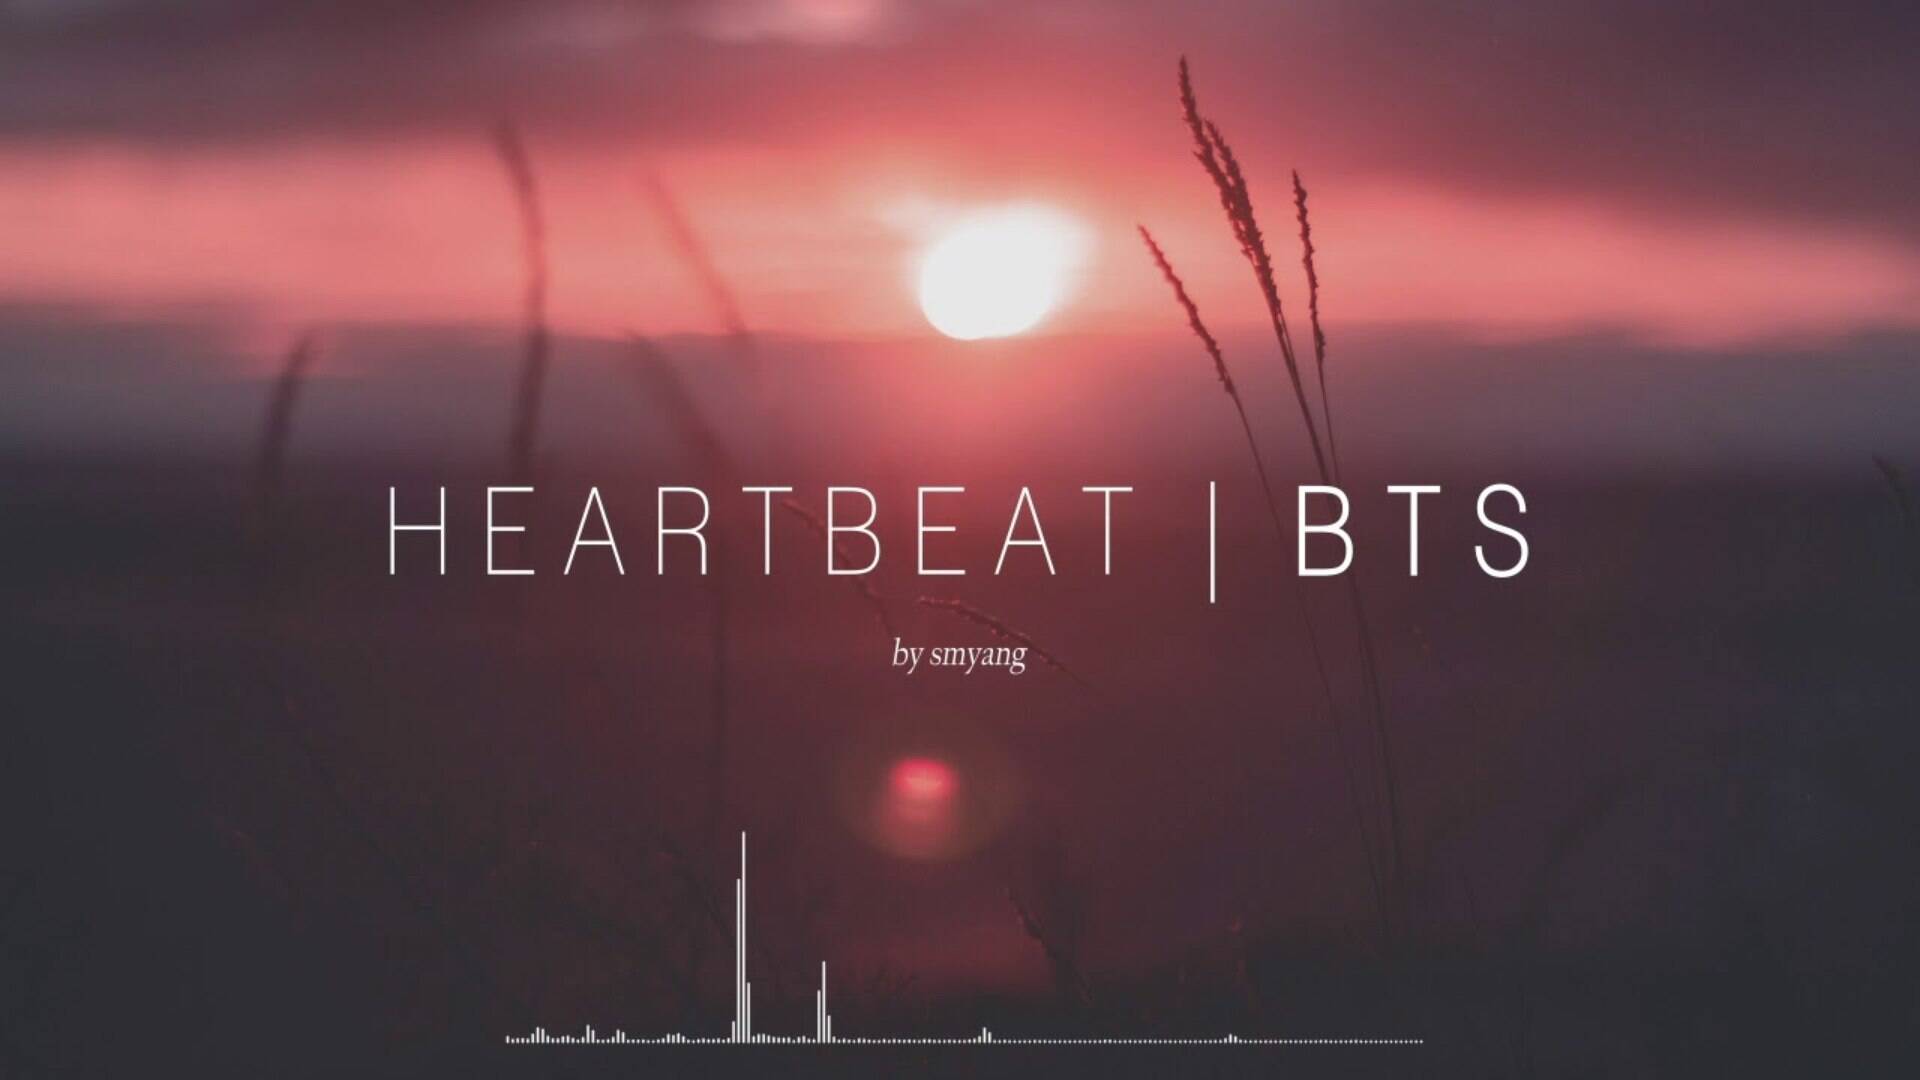 Heartbeat mp3. БТС Heartbeat. BTS Heartbeat обложка. BTS Heartbeat альбом. BTS World Heartbeat.